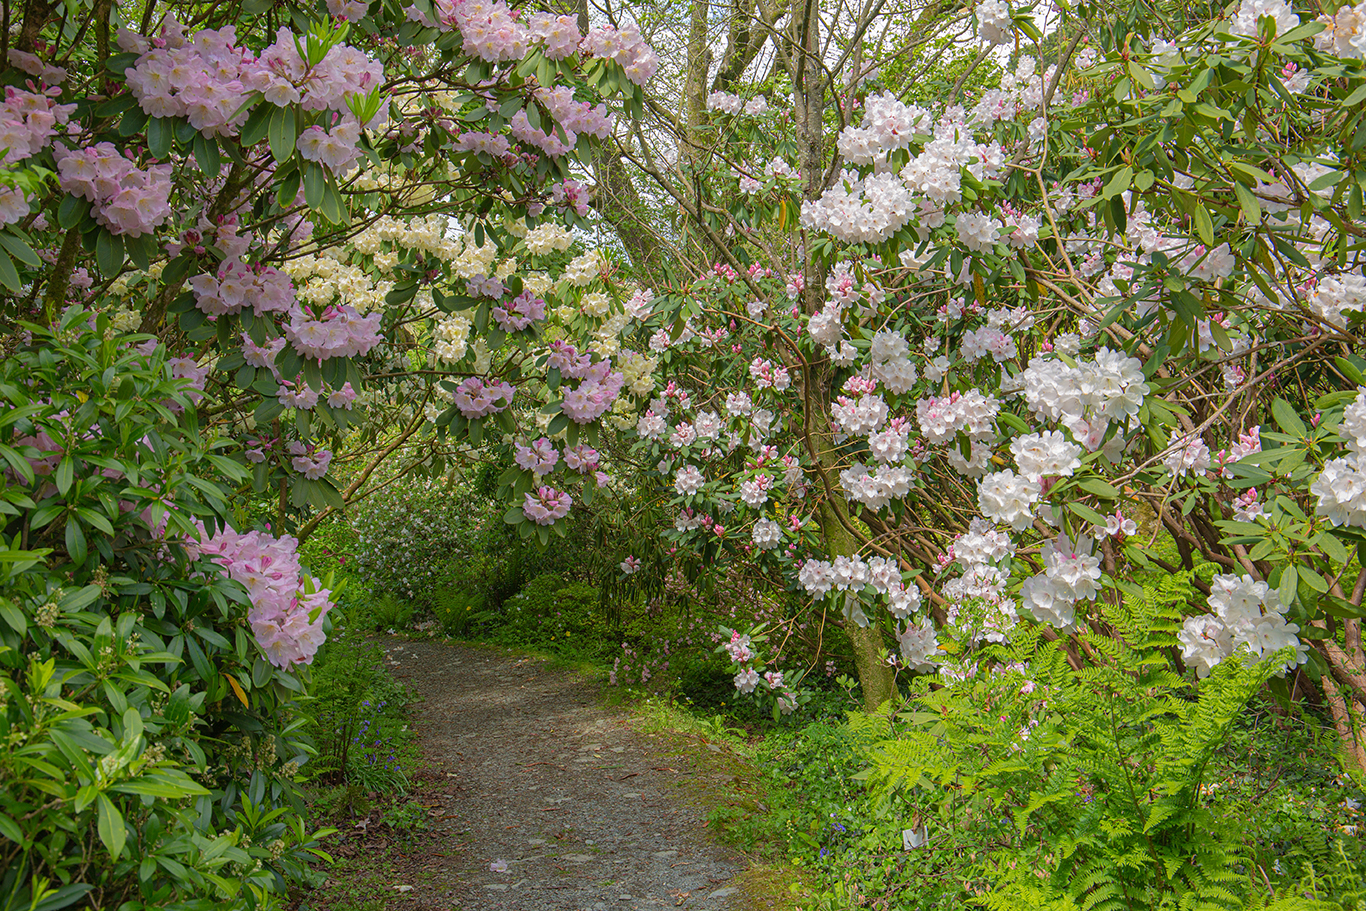 Rhododendron walk